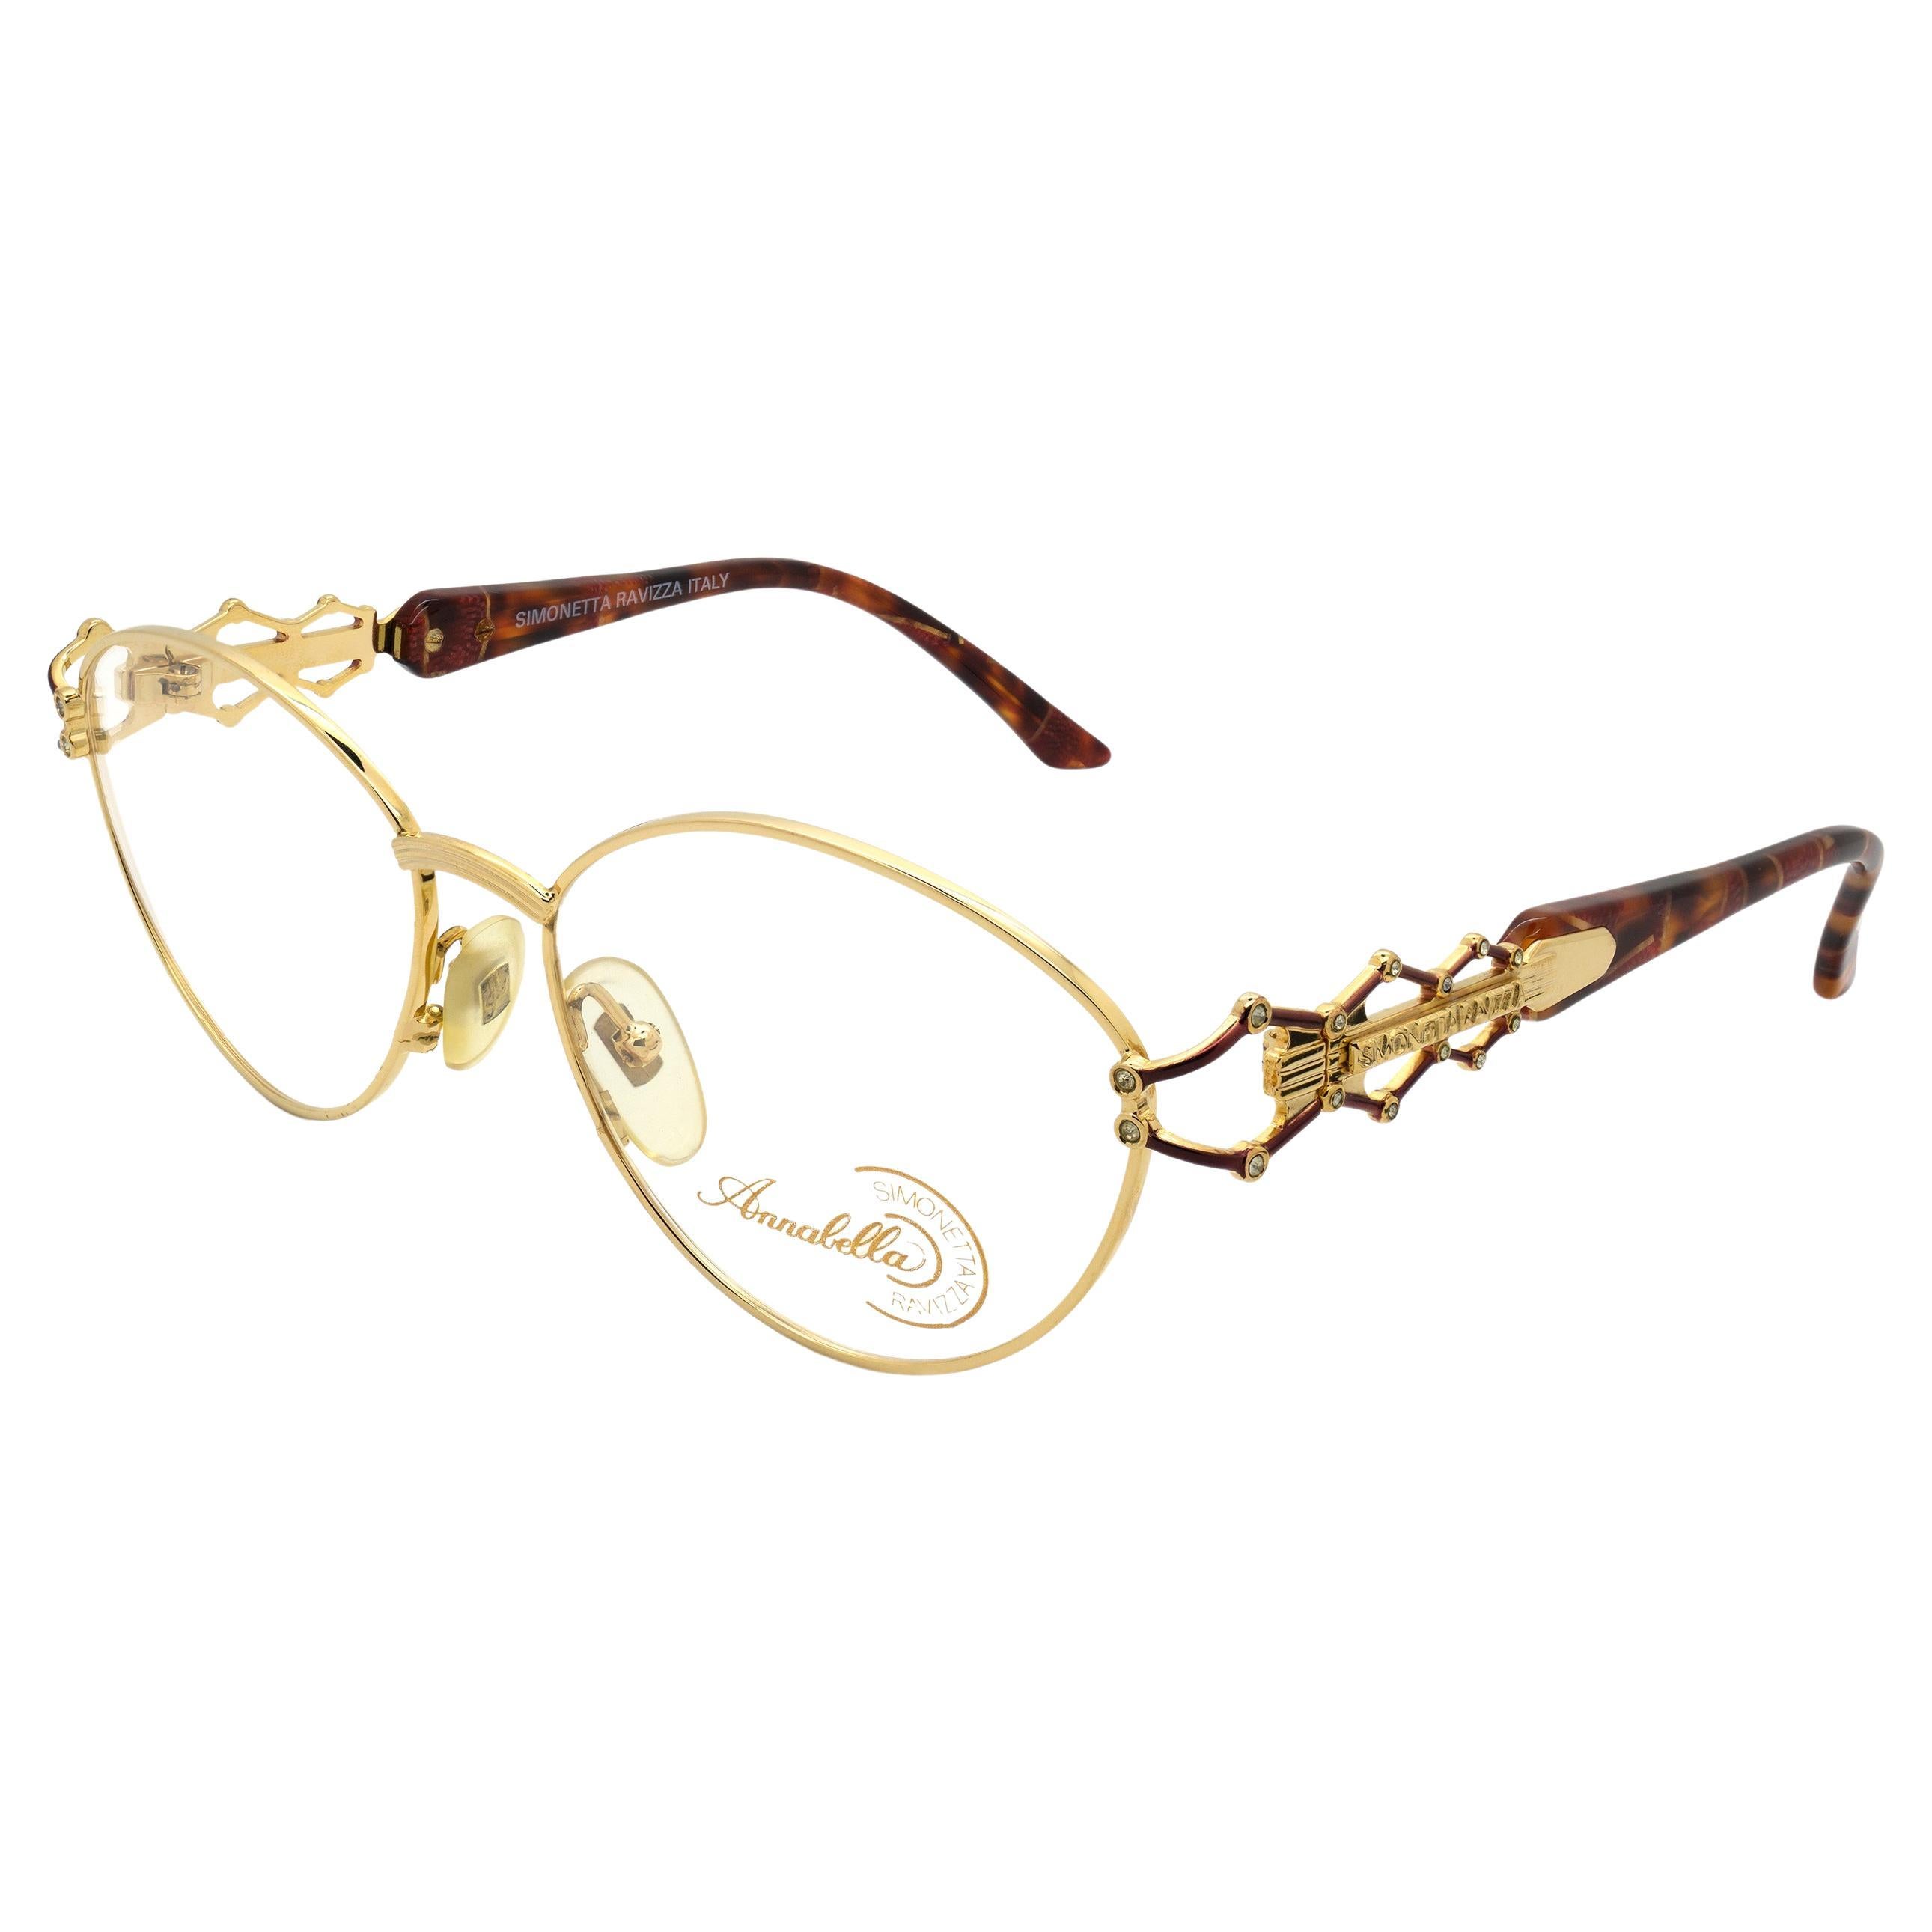 Simonetta Ravizza jewelry vintage glasses frame For Sale